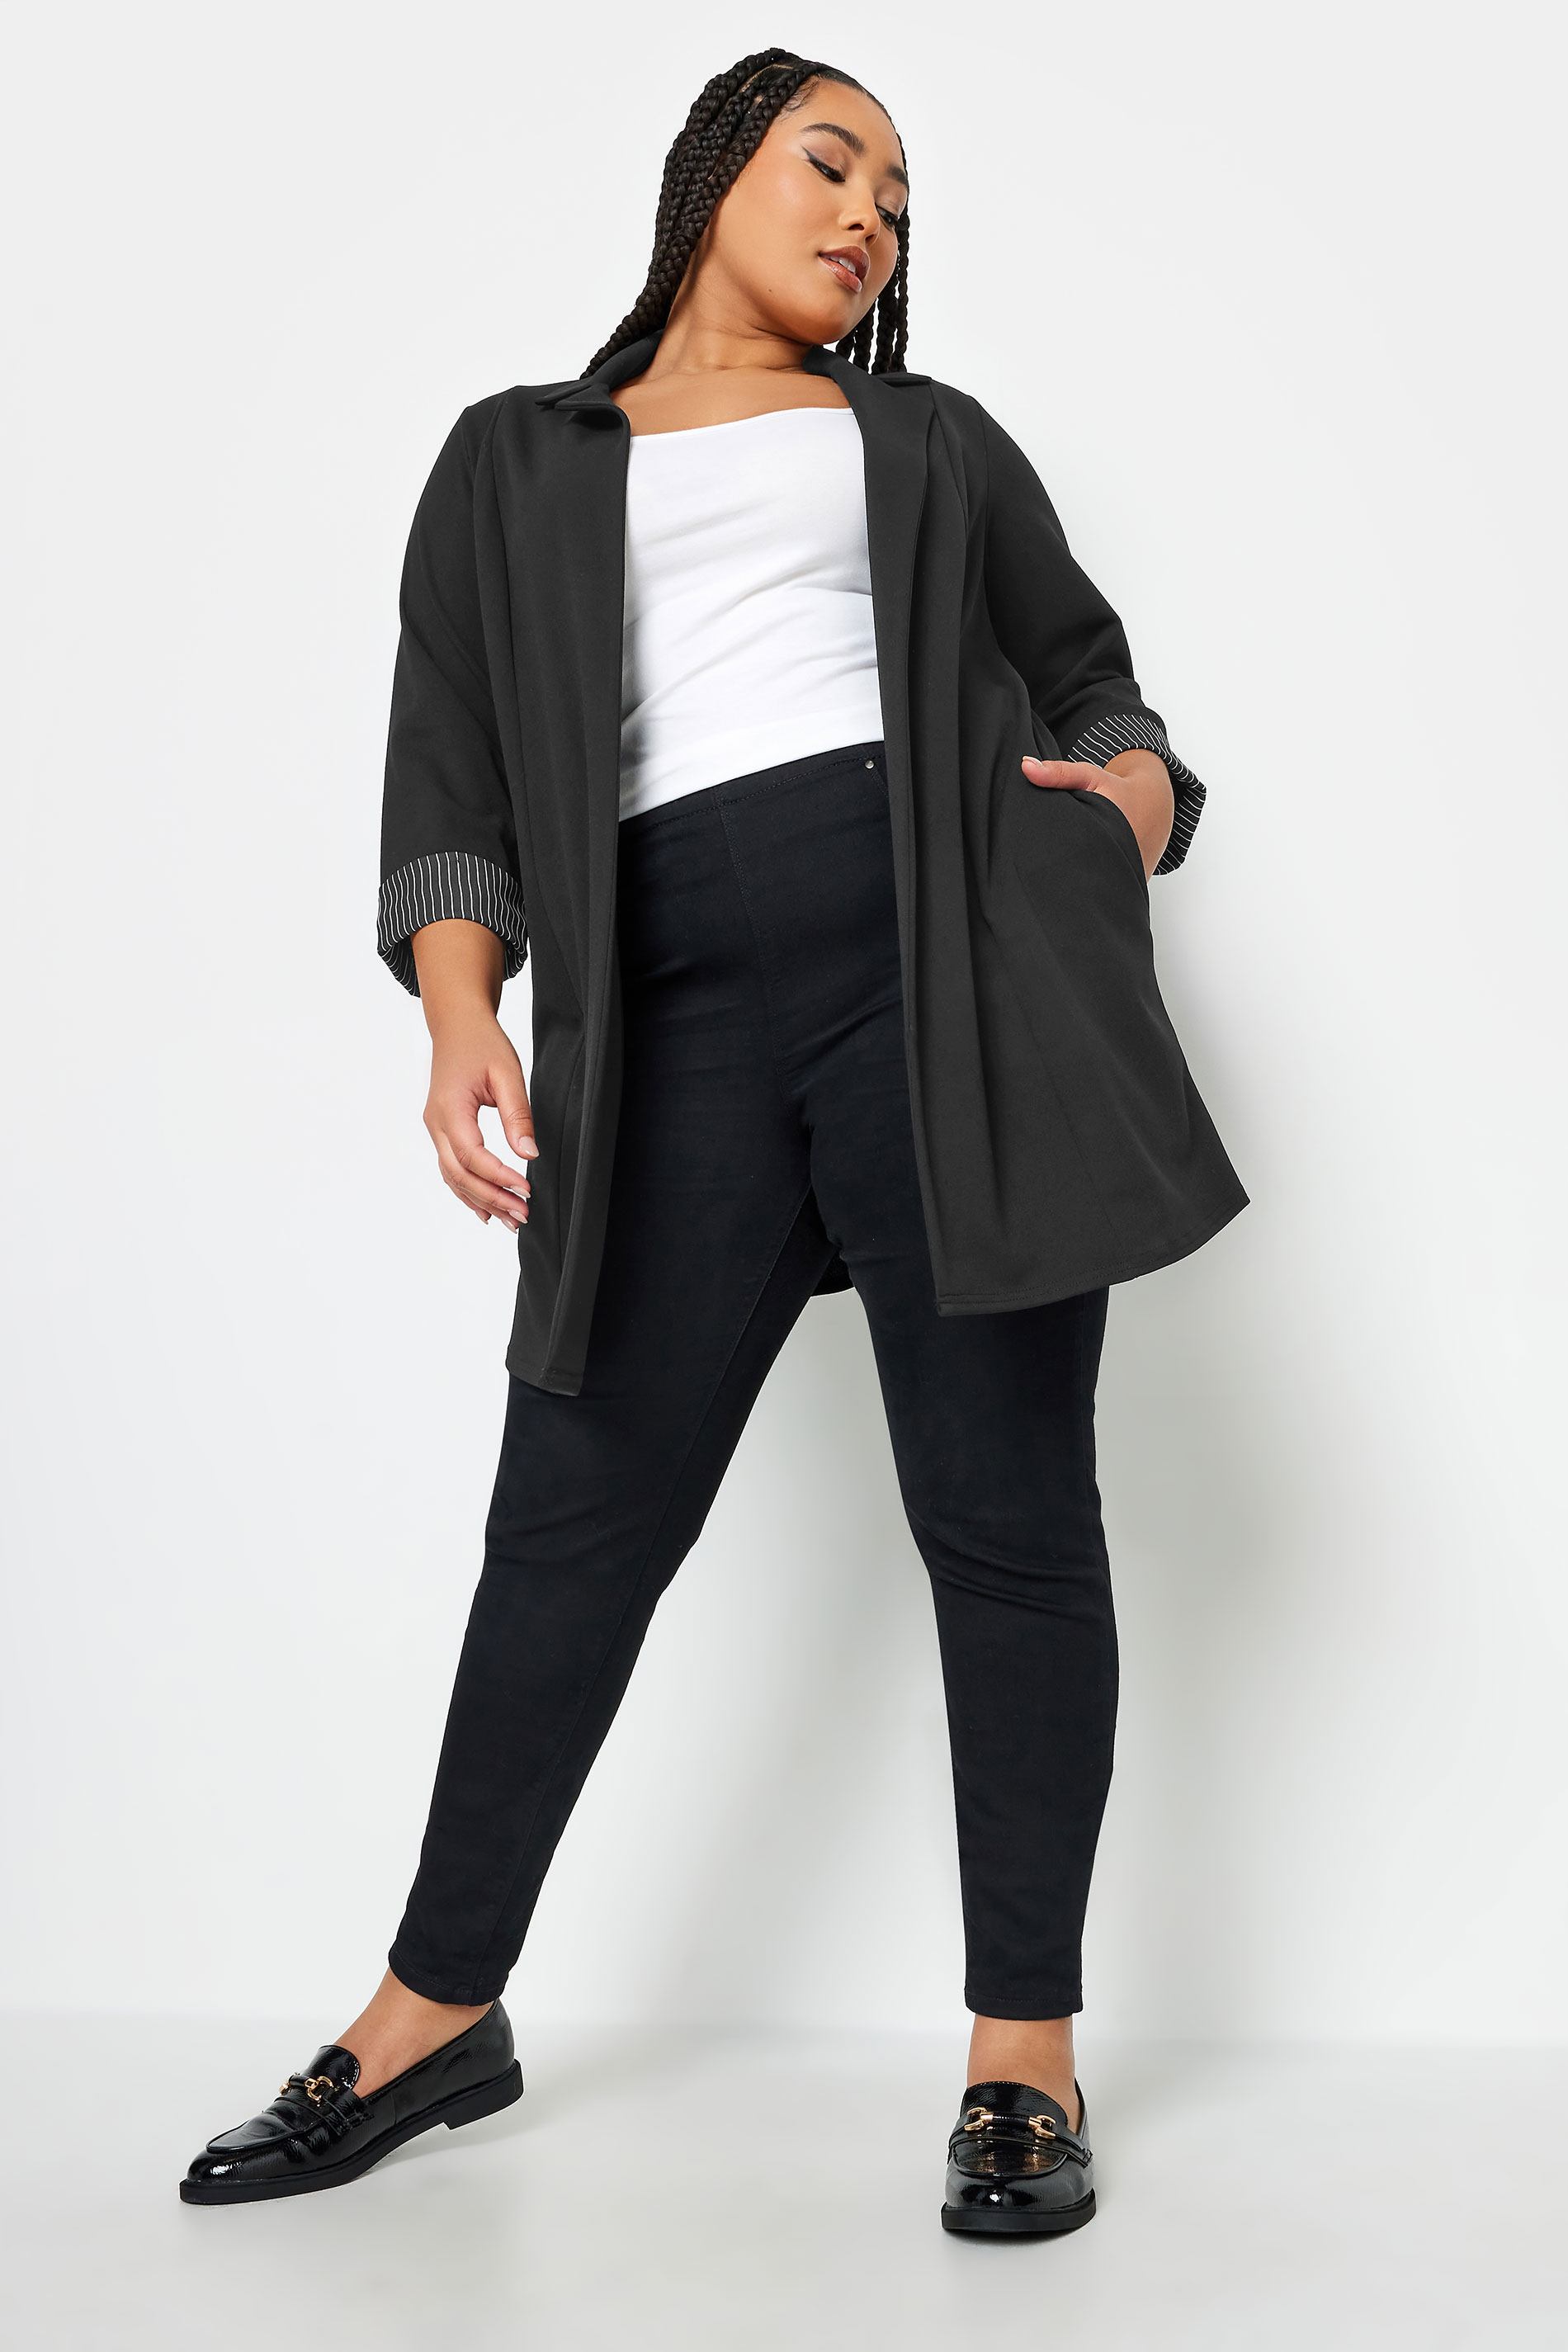 YOURS Plus Size Black Pinstripe Turn Up Sleeve Blazer | Yours Clothing 2